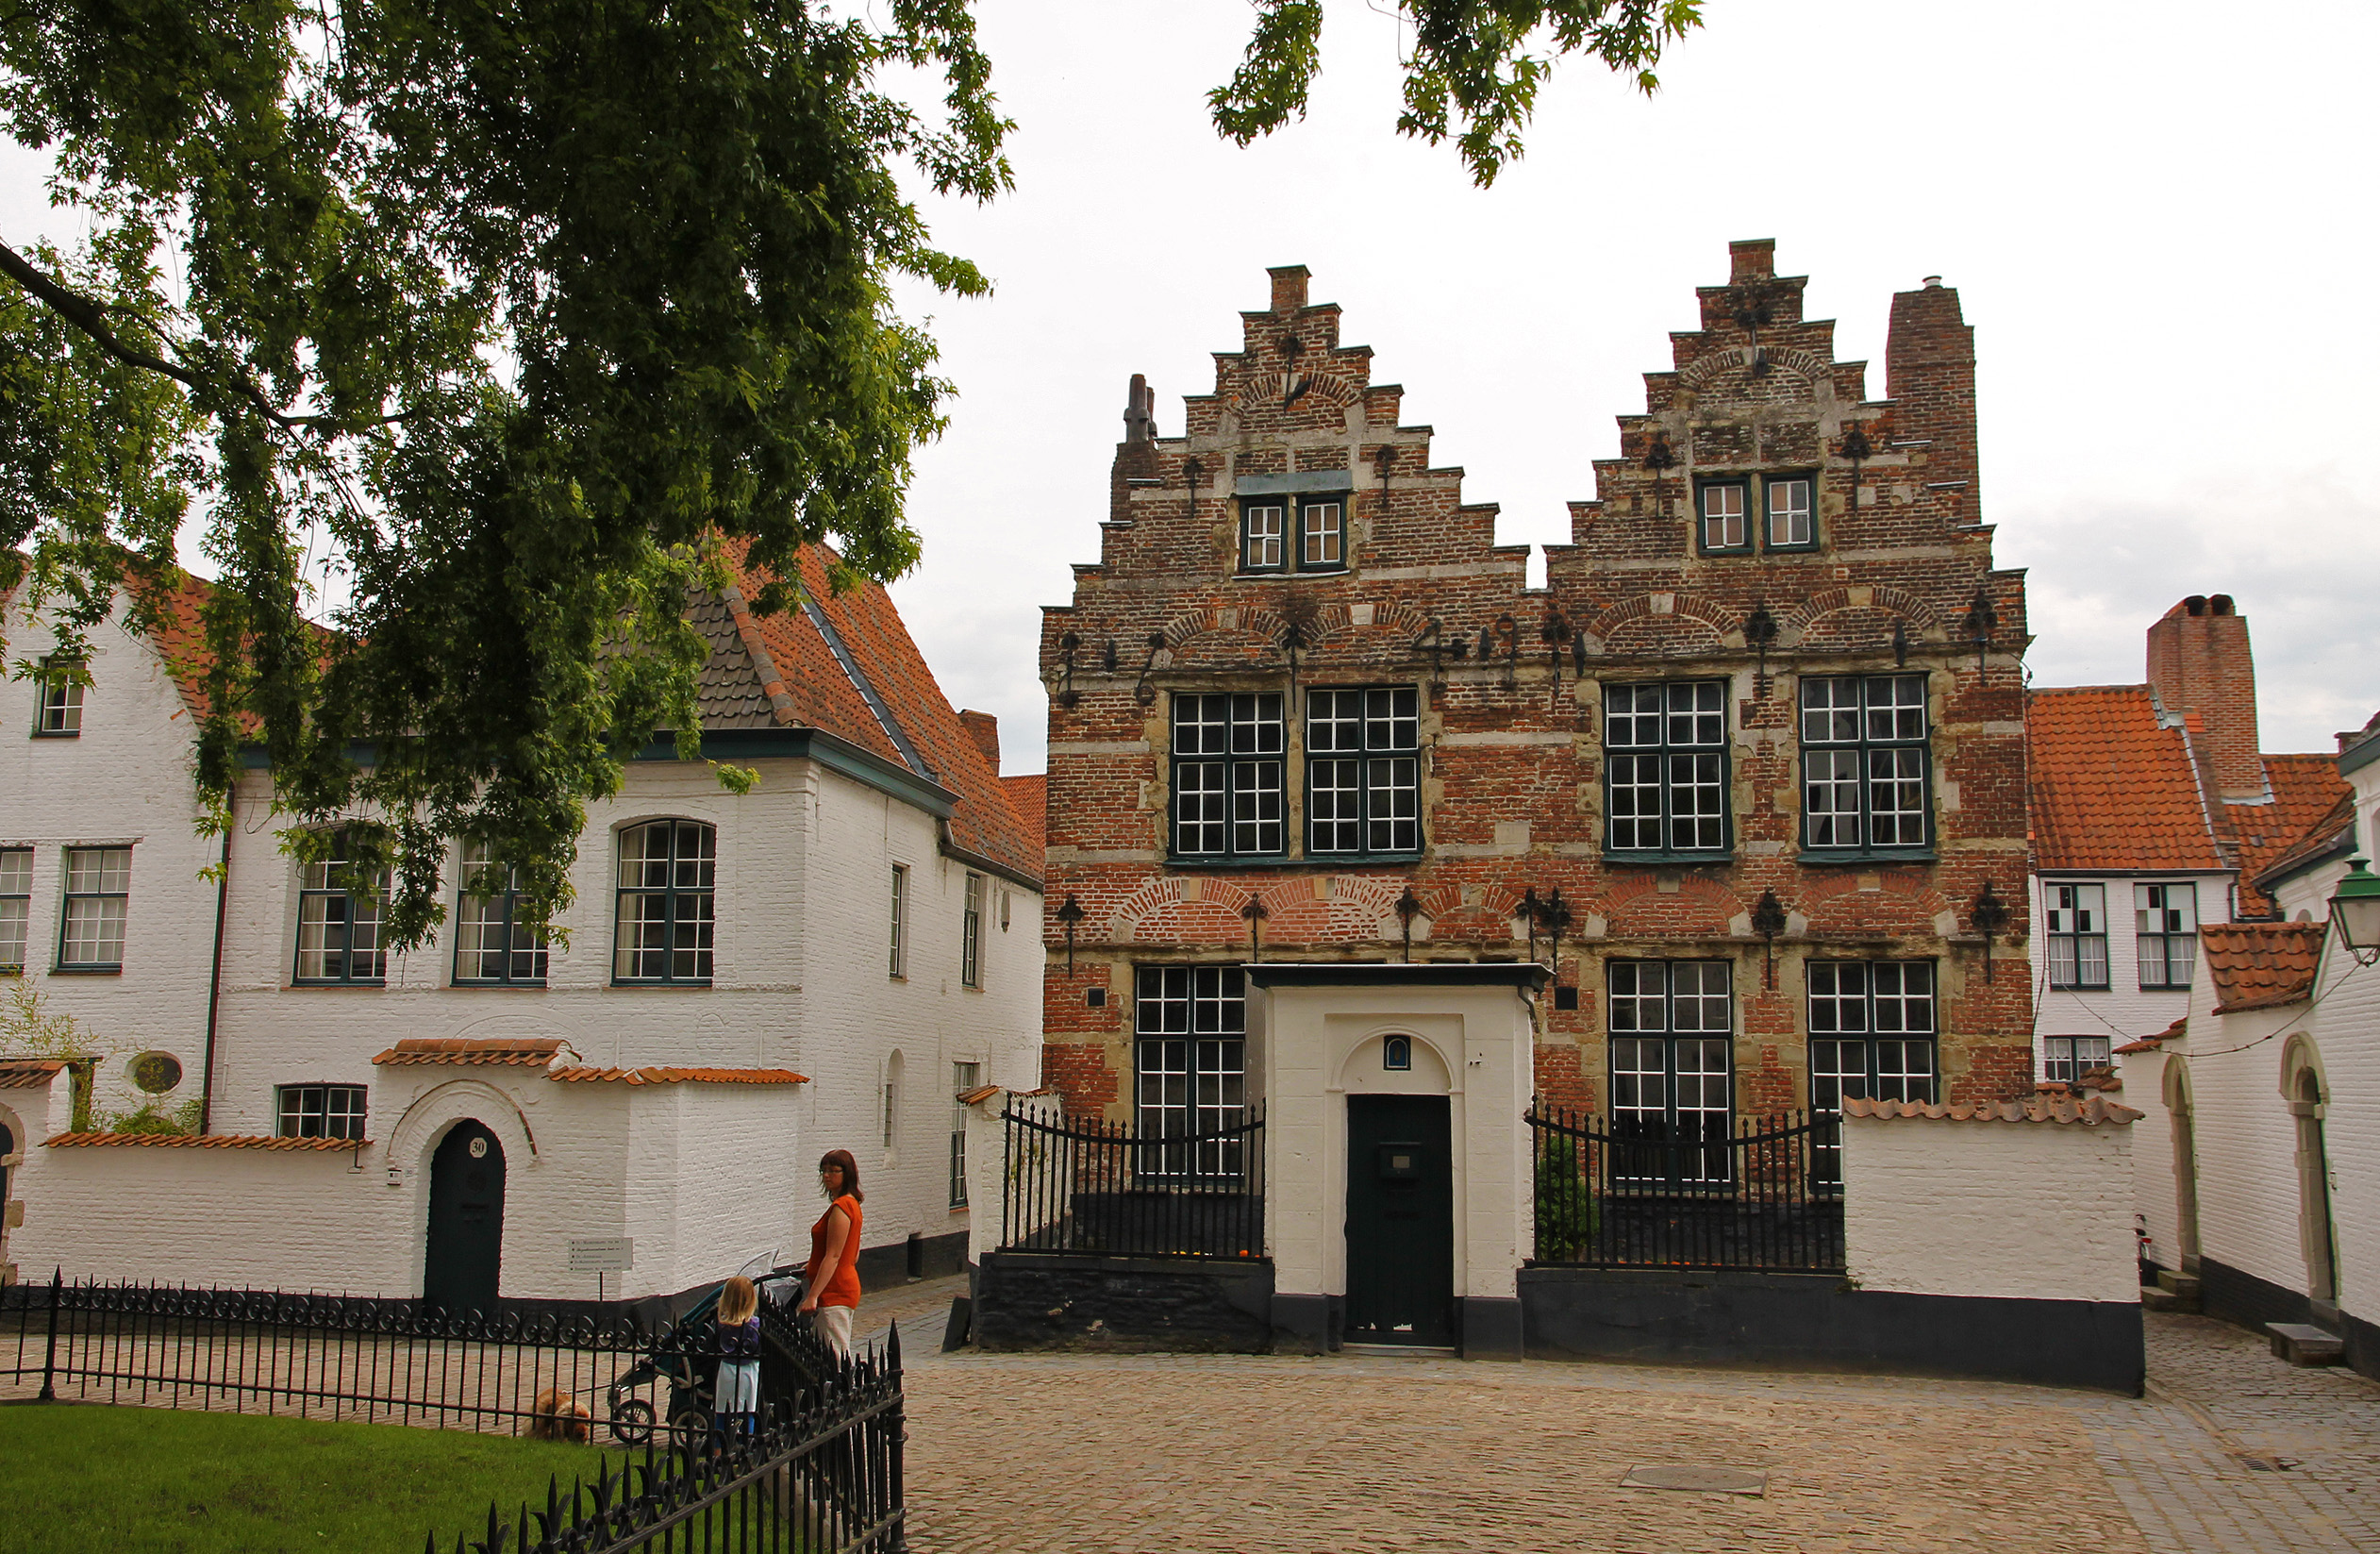 The béguinage of Kortrijk.